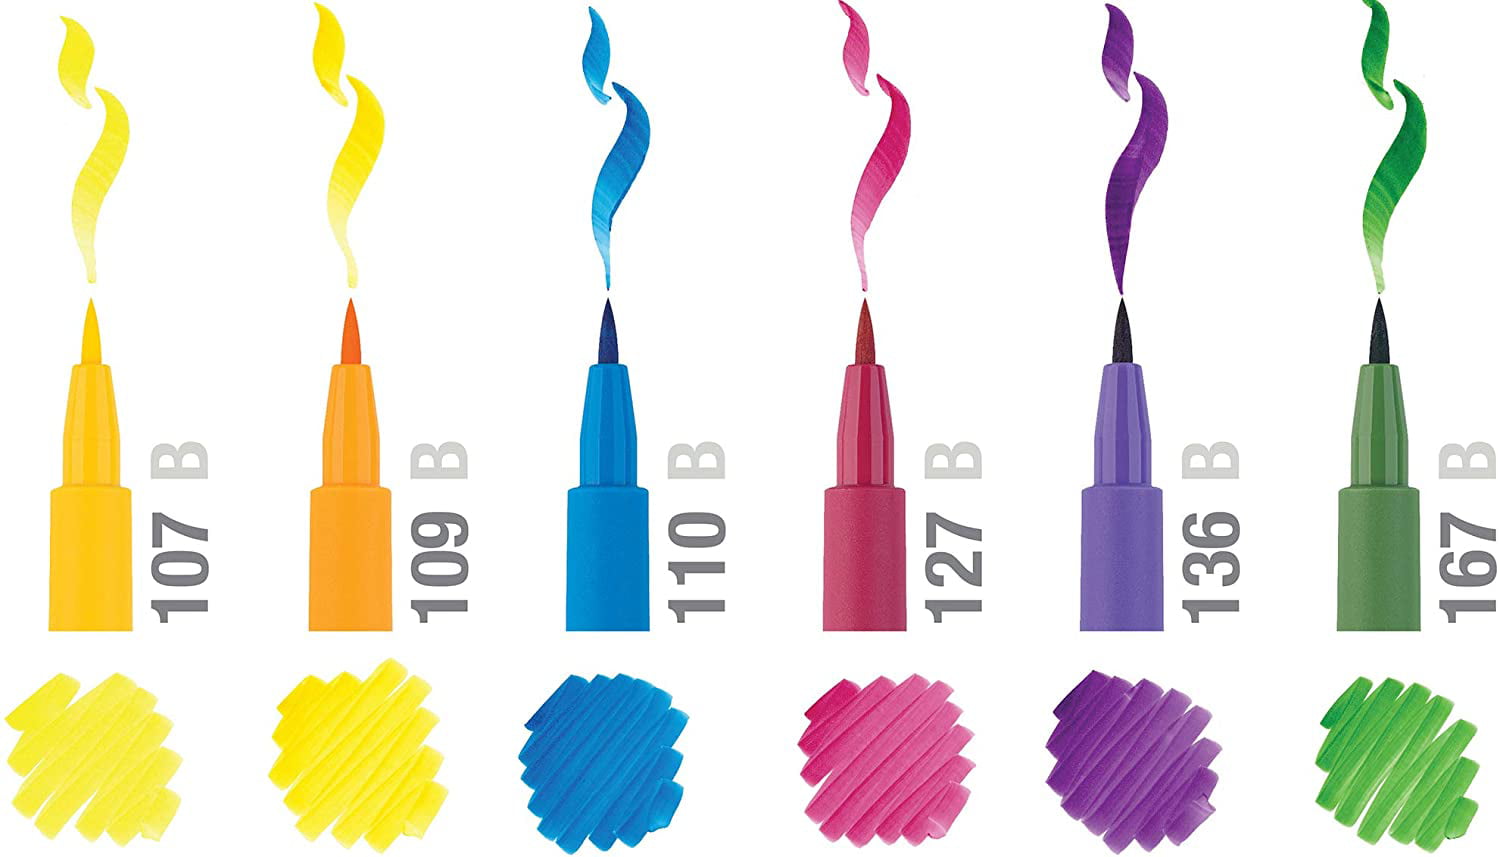 Faber-Castell - PITT Artist Brush Pen Set - 6-Color Shades of Blue